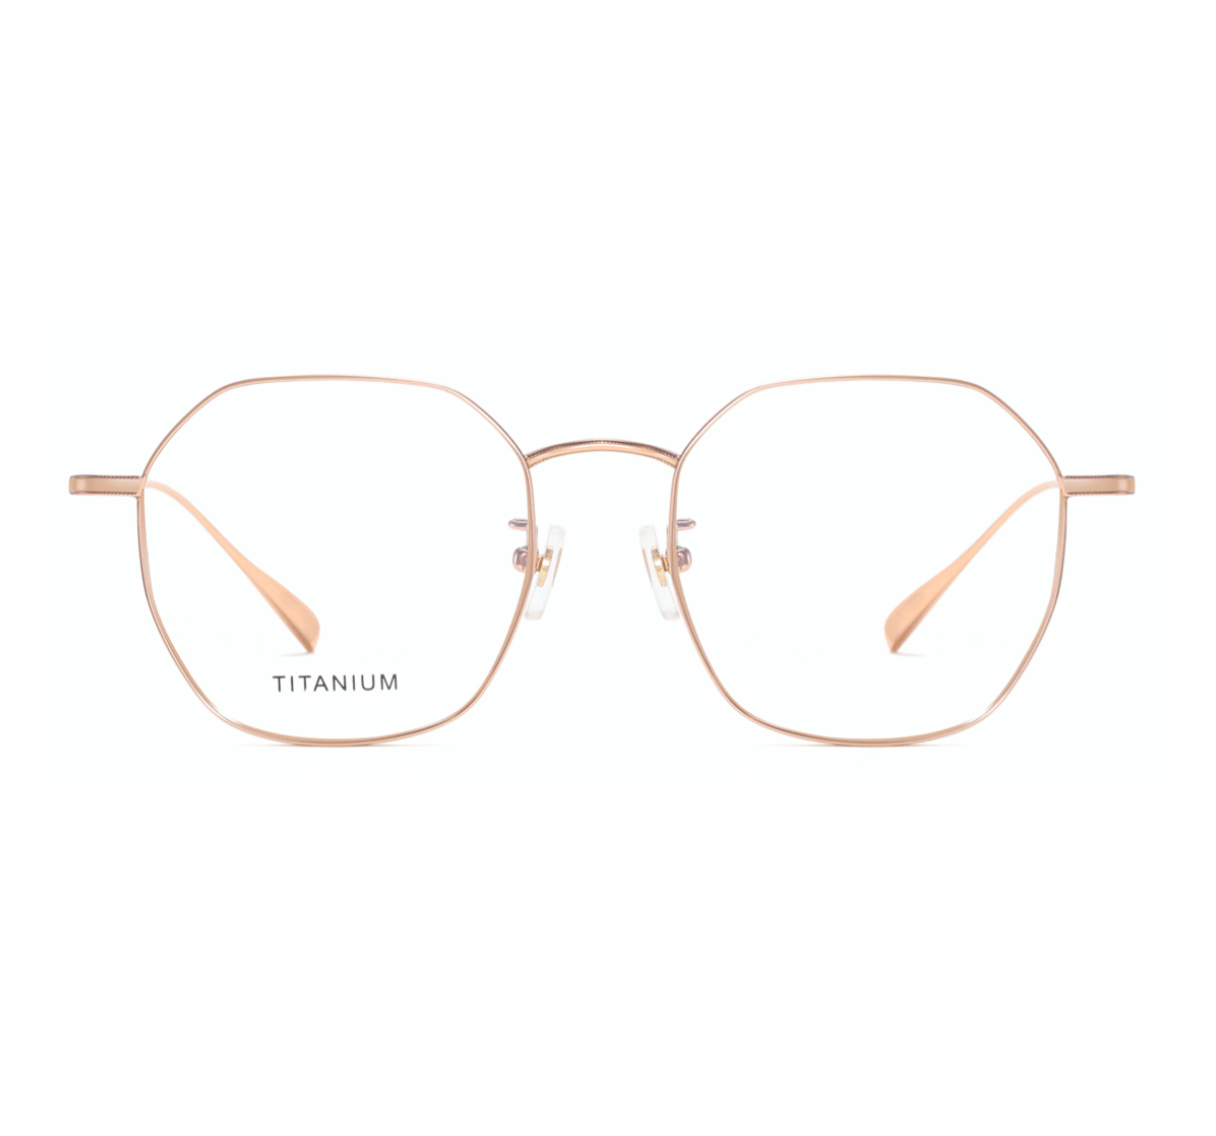 Titanium eyeglass frame, eyeglass frame manufacturer